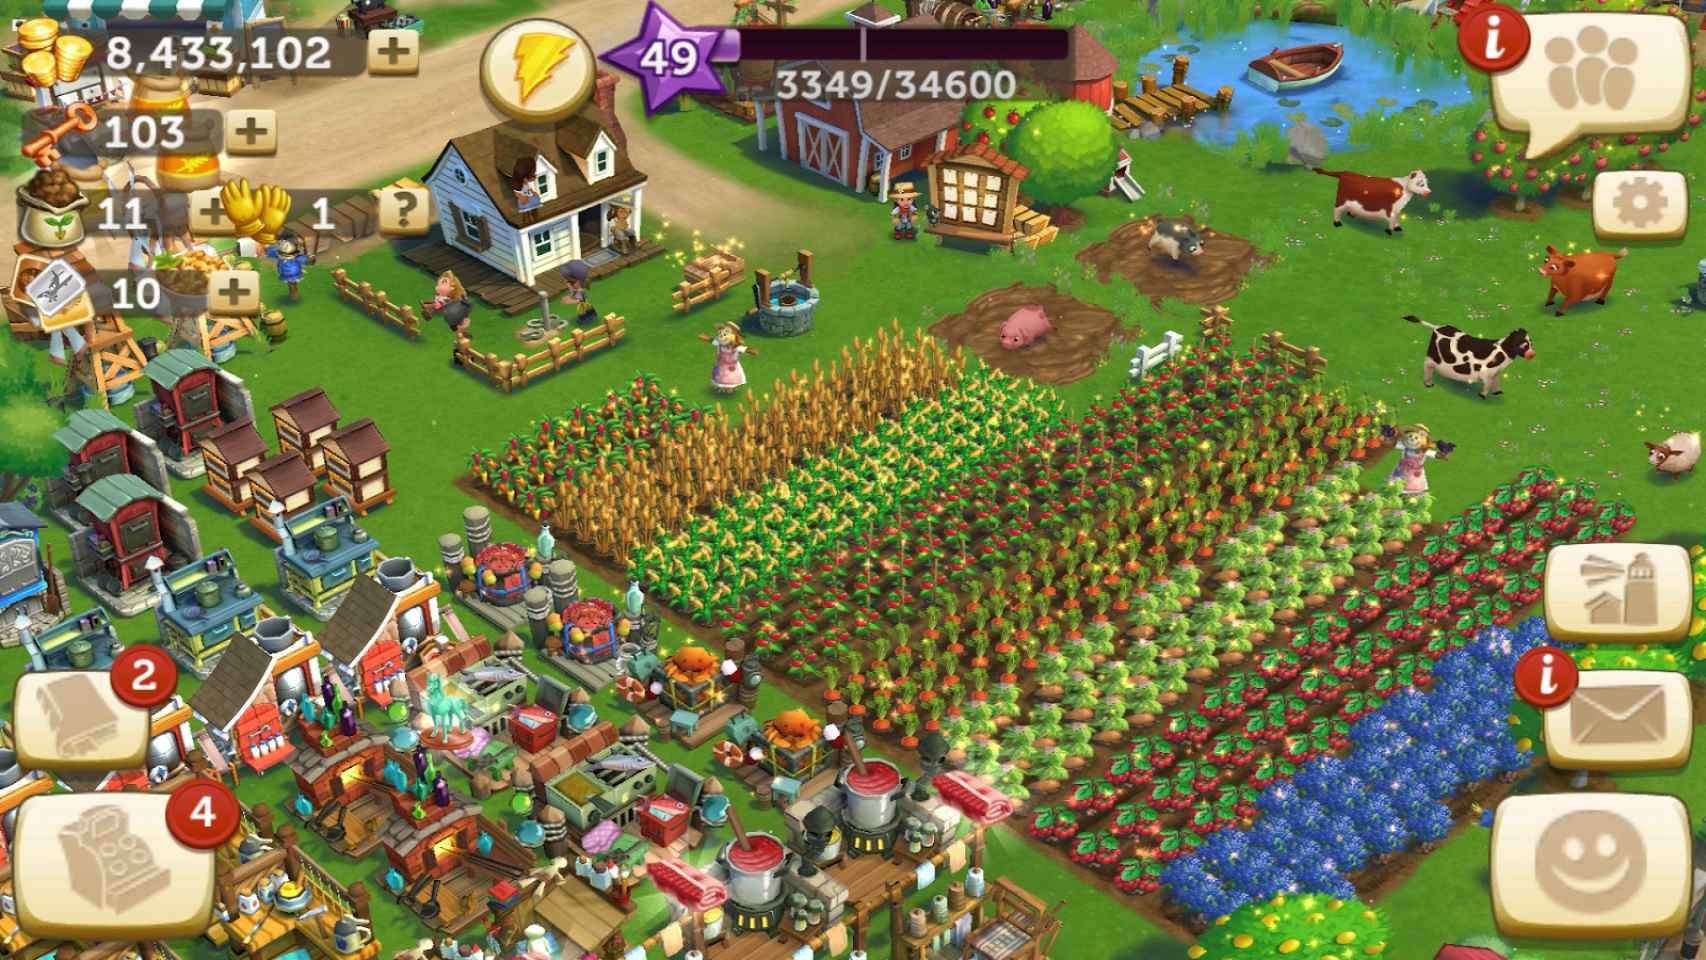 Farmville 2